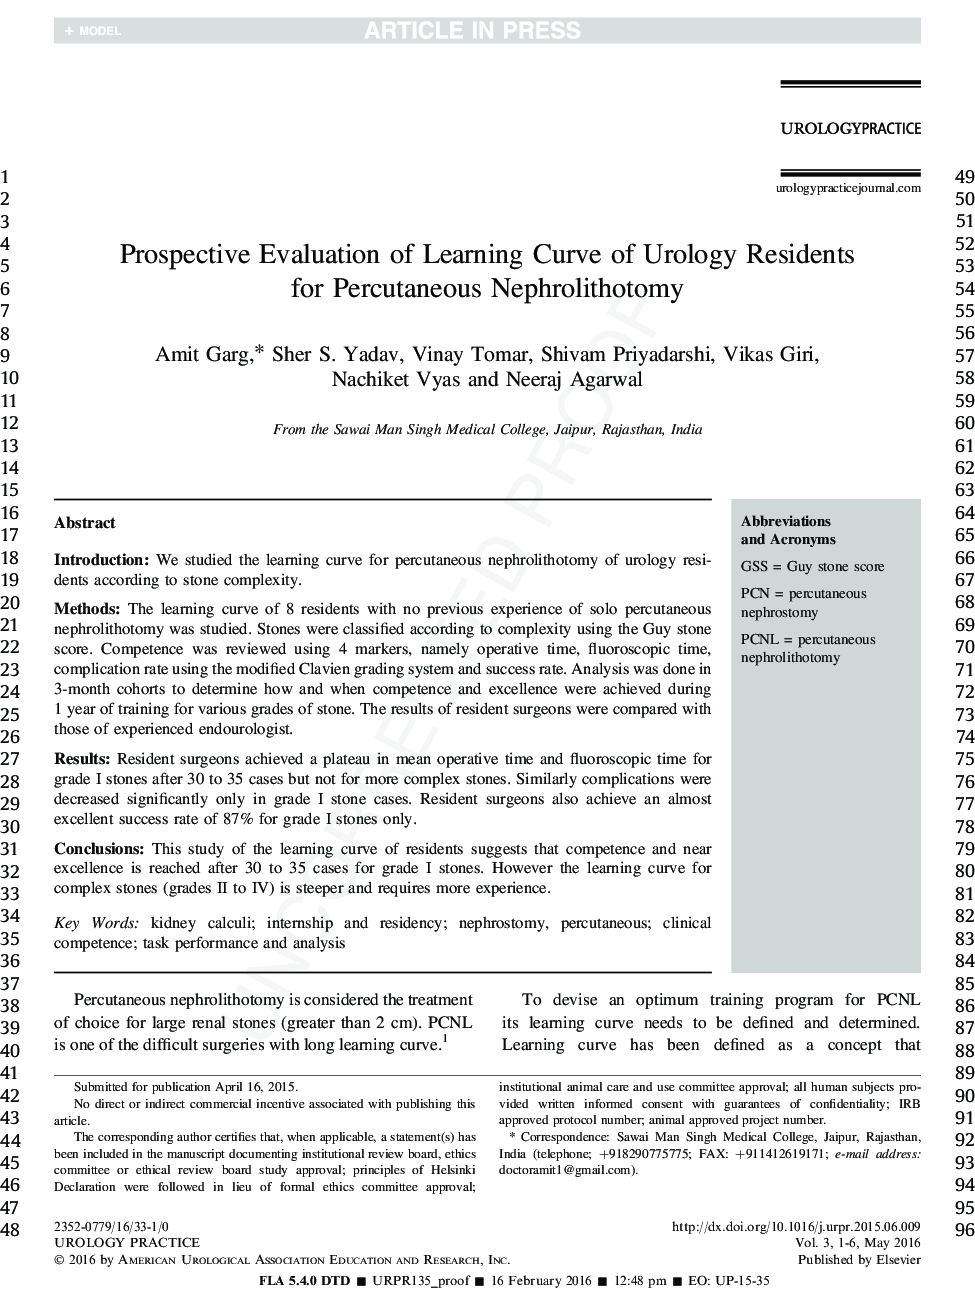 Prospective Evaluation of Learning Curve of Urology Residents for Percutaneous Nephrolithotomy